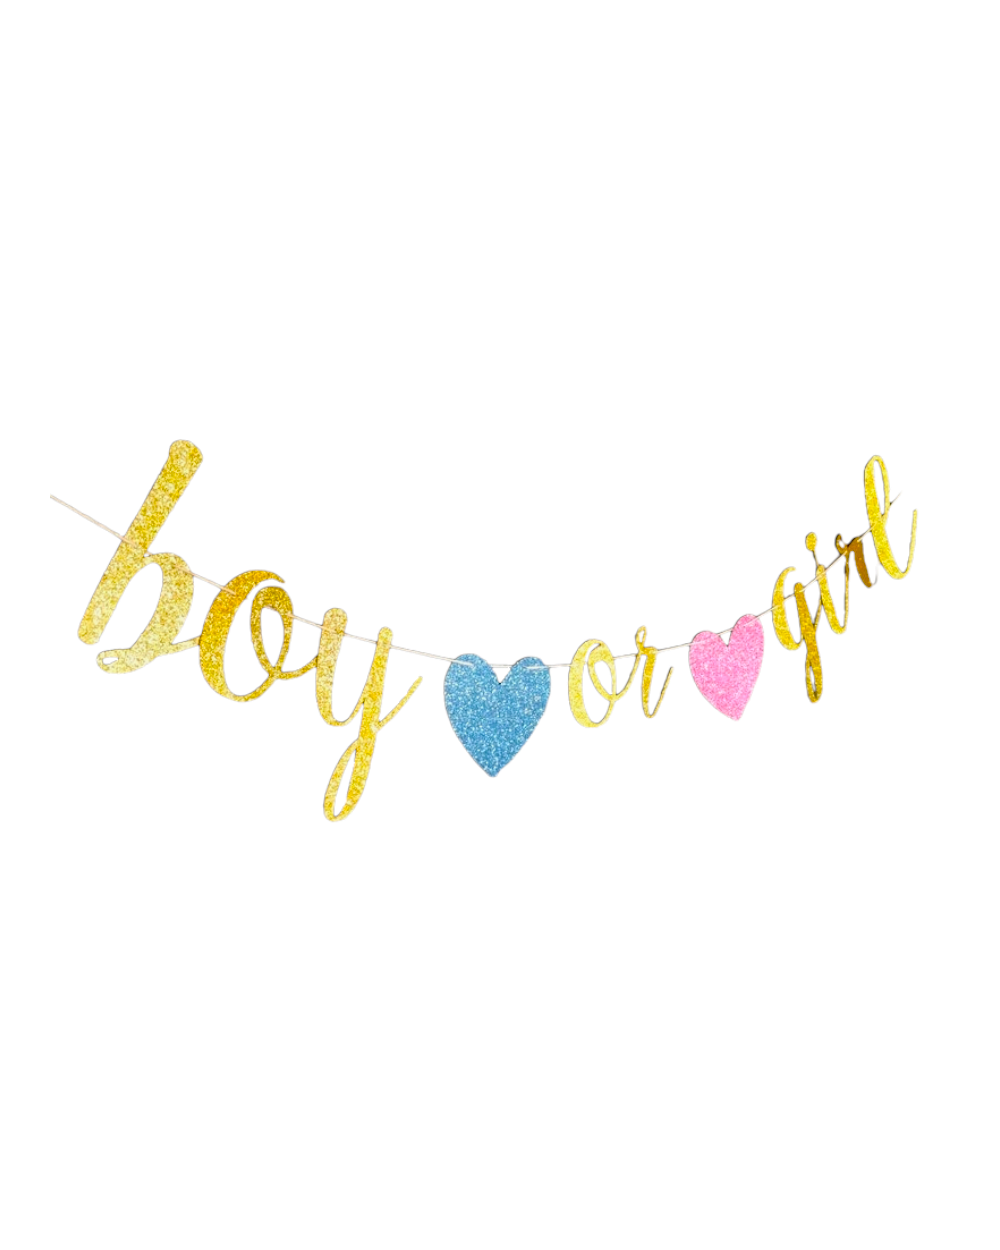 Banderole pailletée Boy or Girl - Doré, rose et bleu